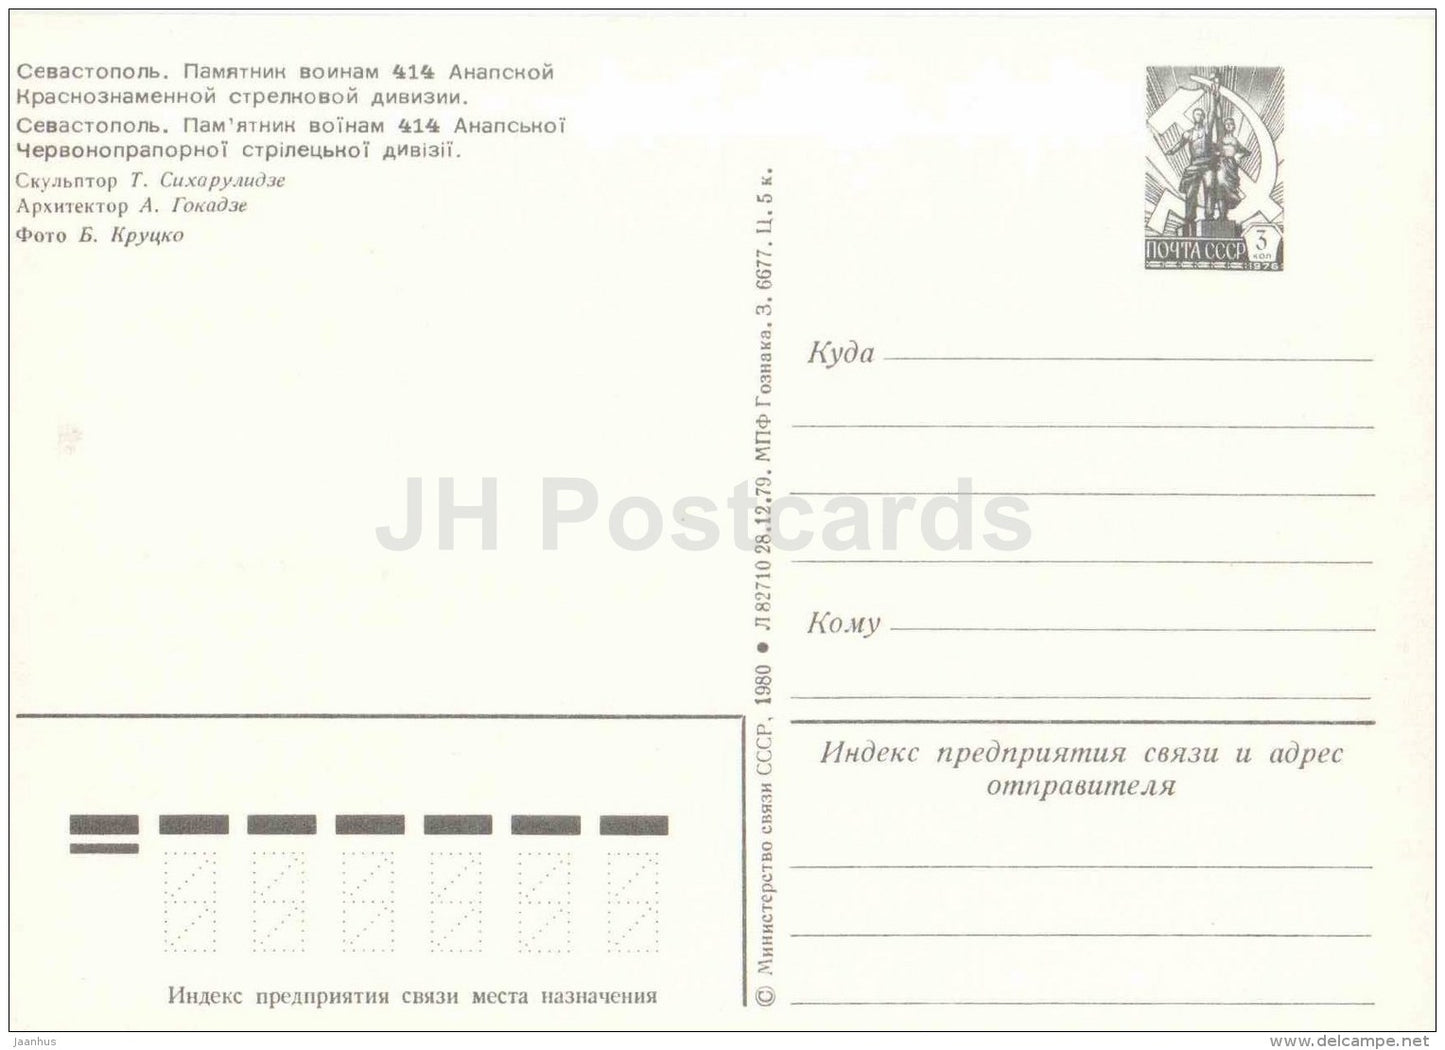 Monument to 414 Anapa Red Banner Rifle Division - Sevastopol - postal stationery - 1980 - Ukraine USSR - unused - JH Postcards